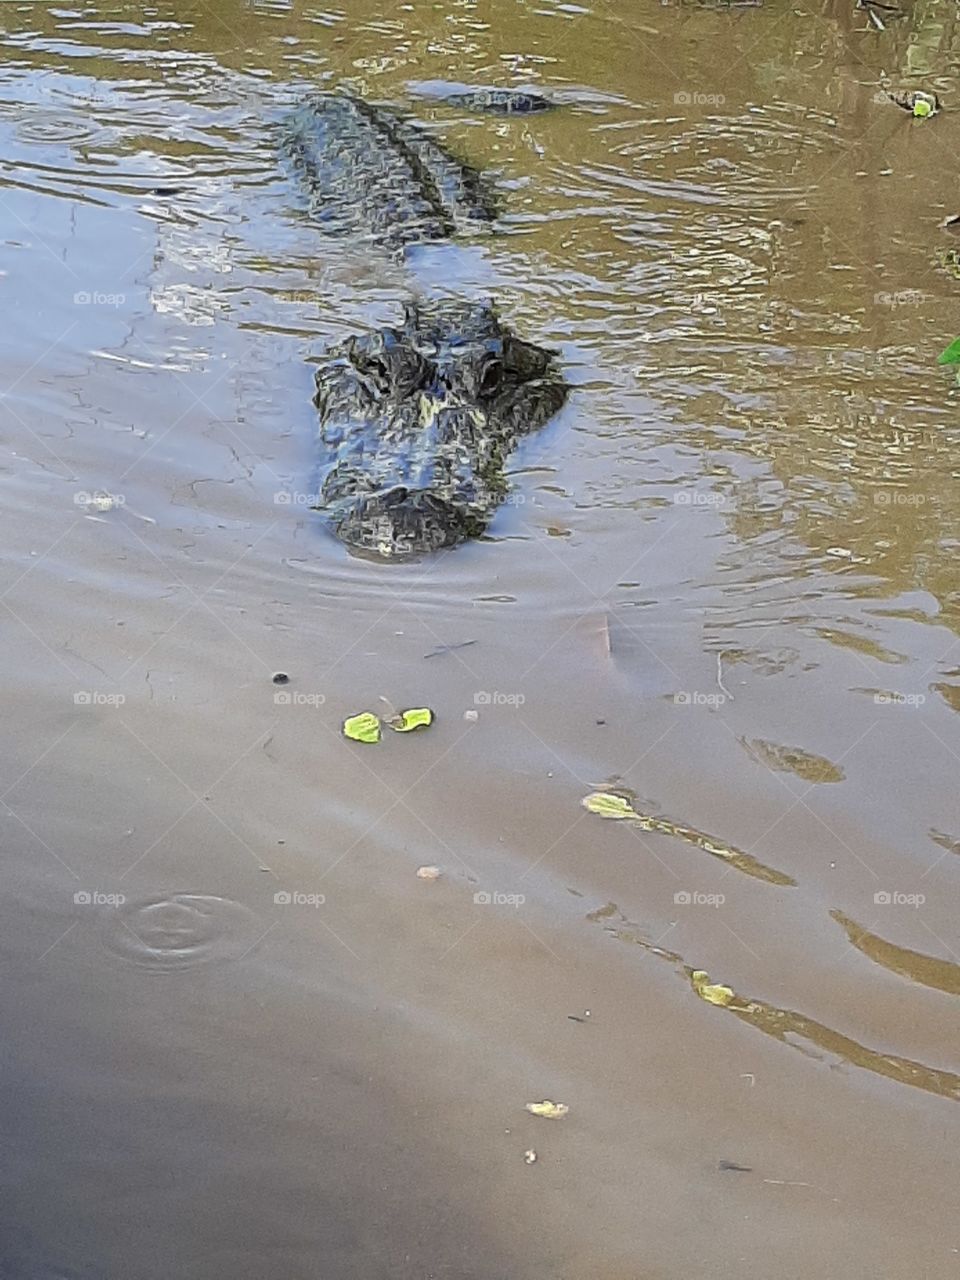 Alligators are watching